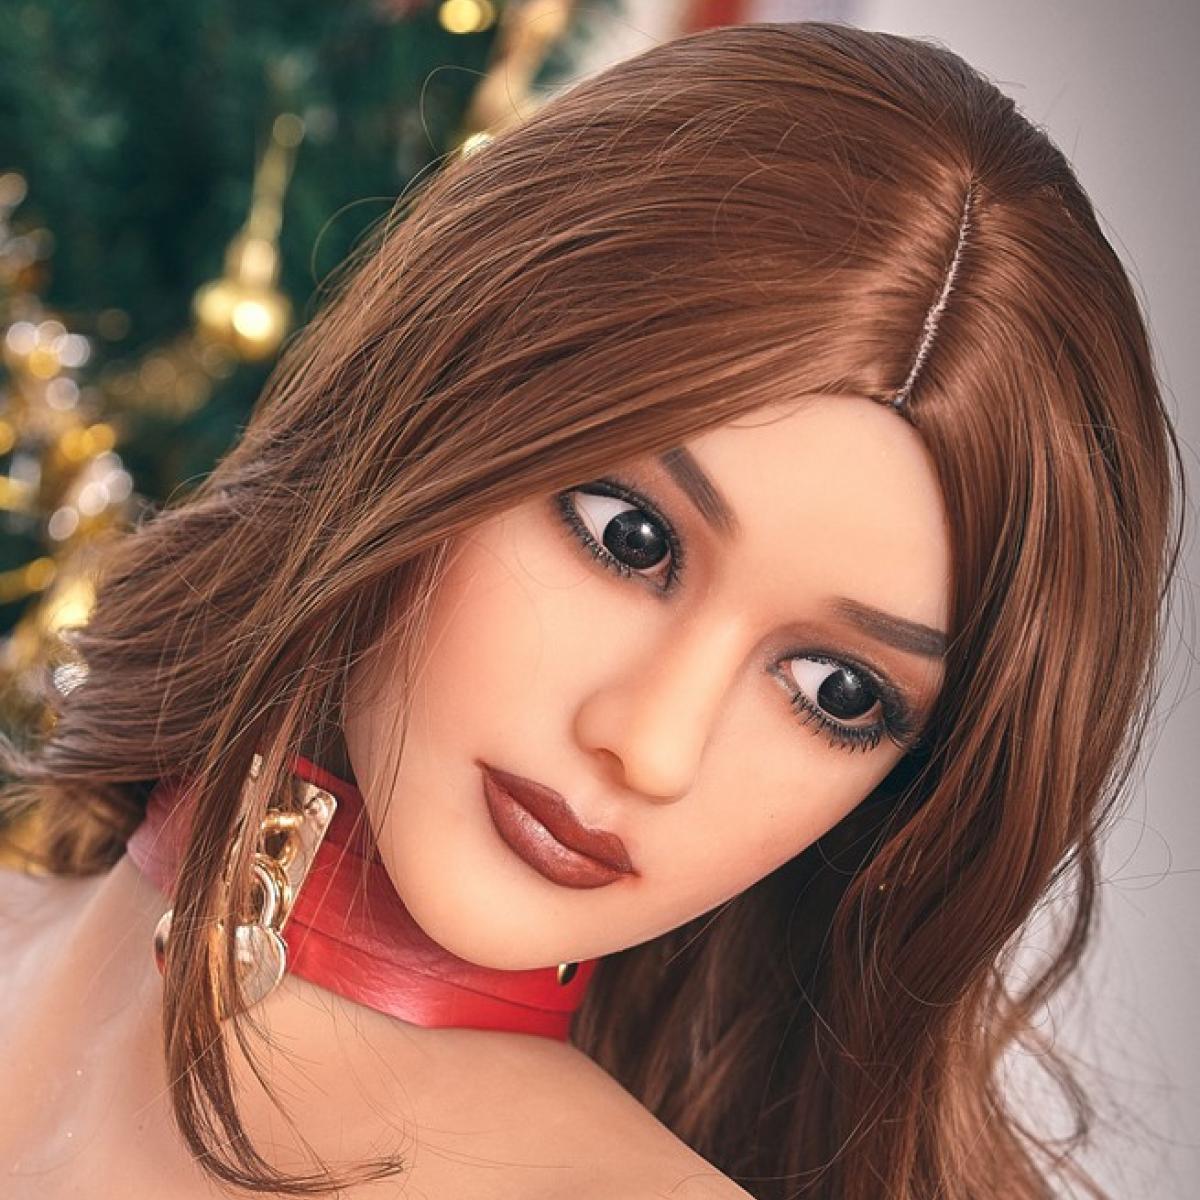 Neodoll Racy Fiona - Sex Doll Head - M16 Compatible - Tan